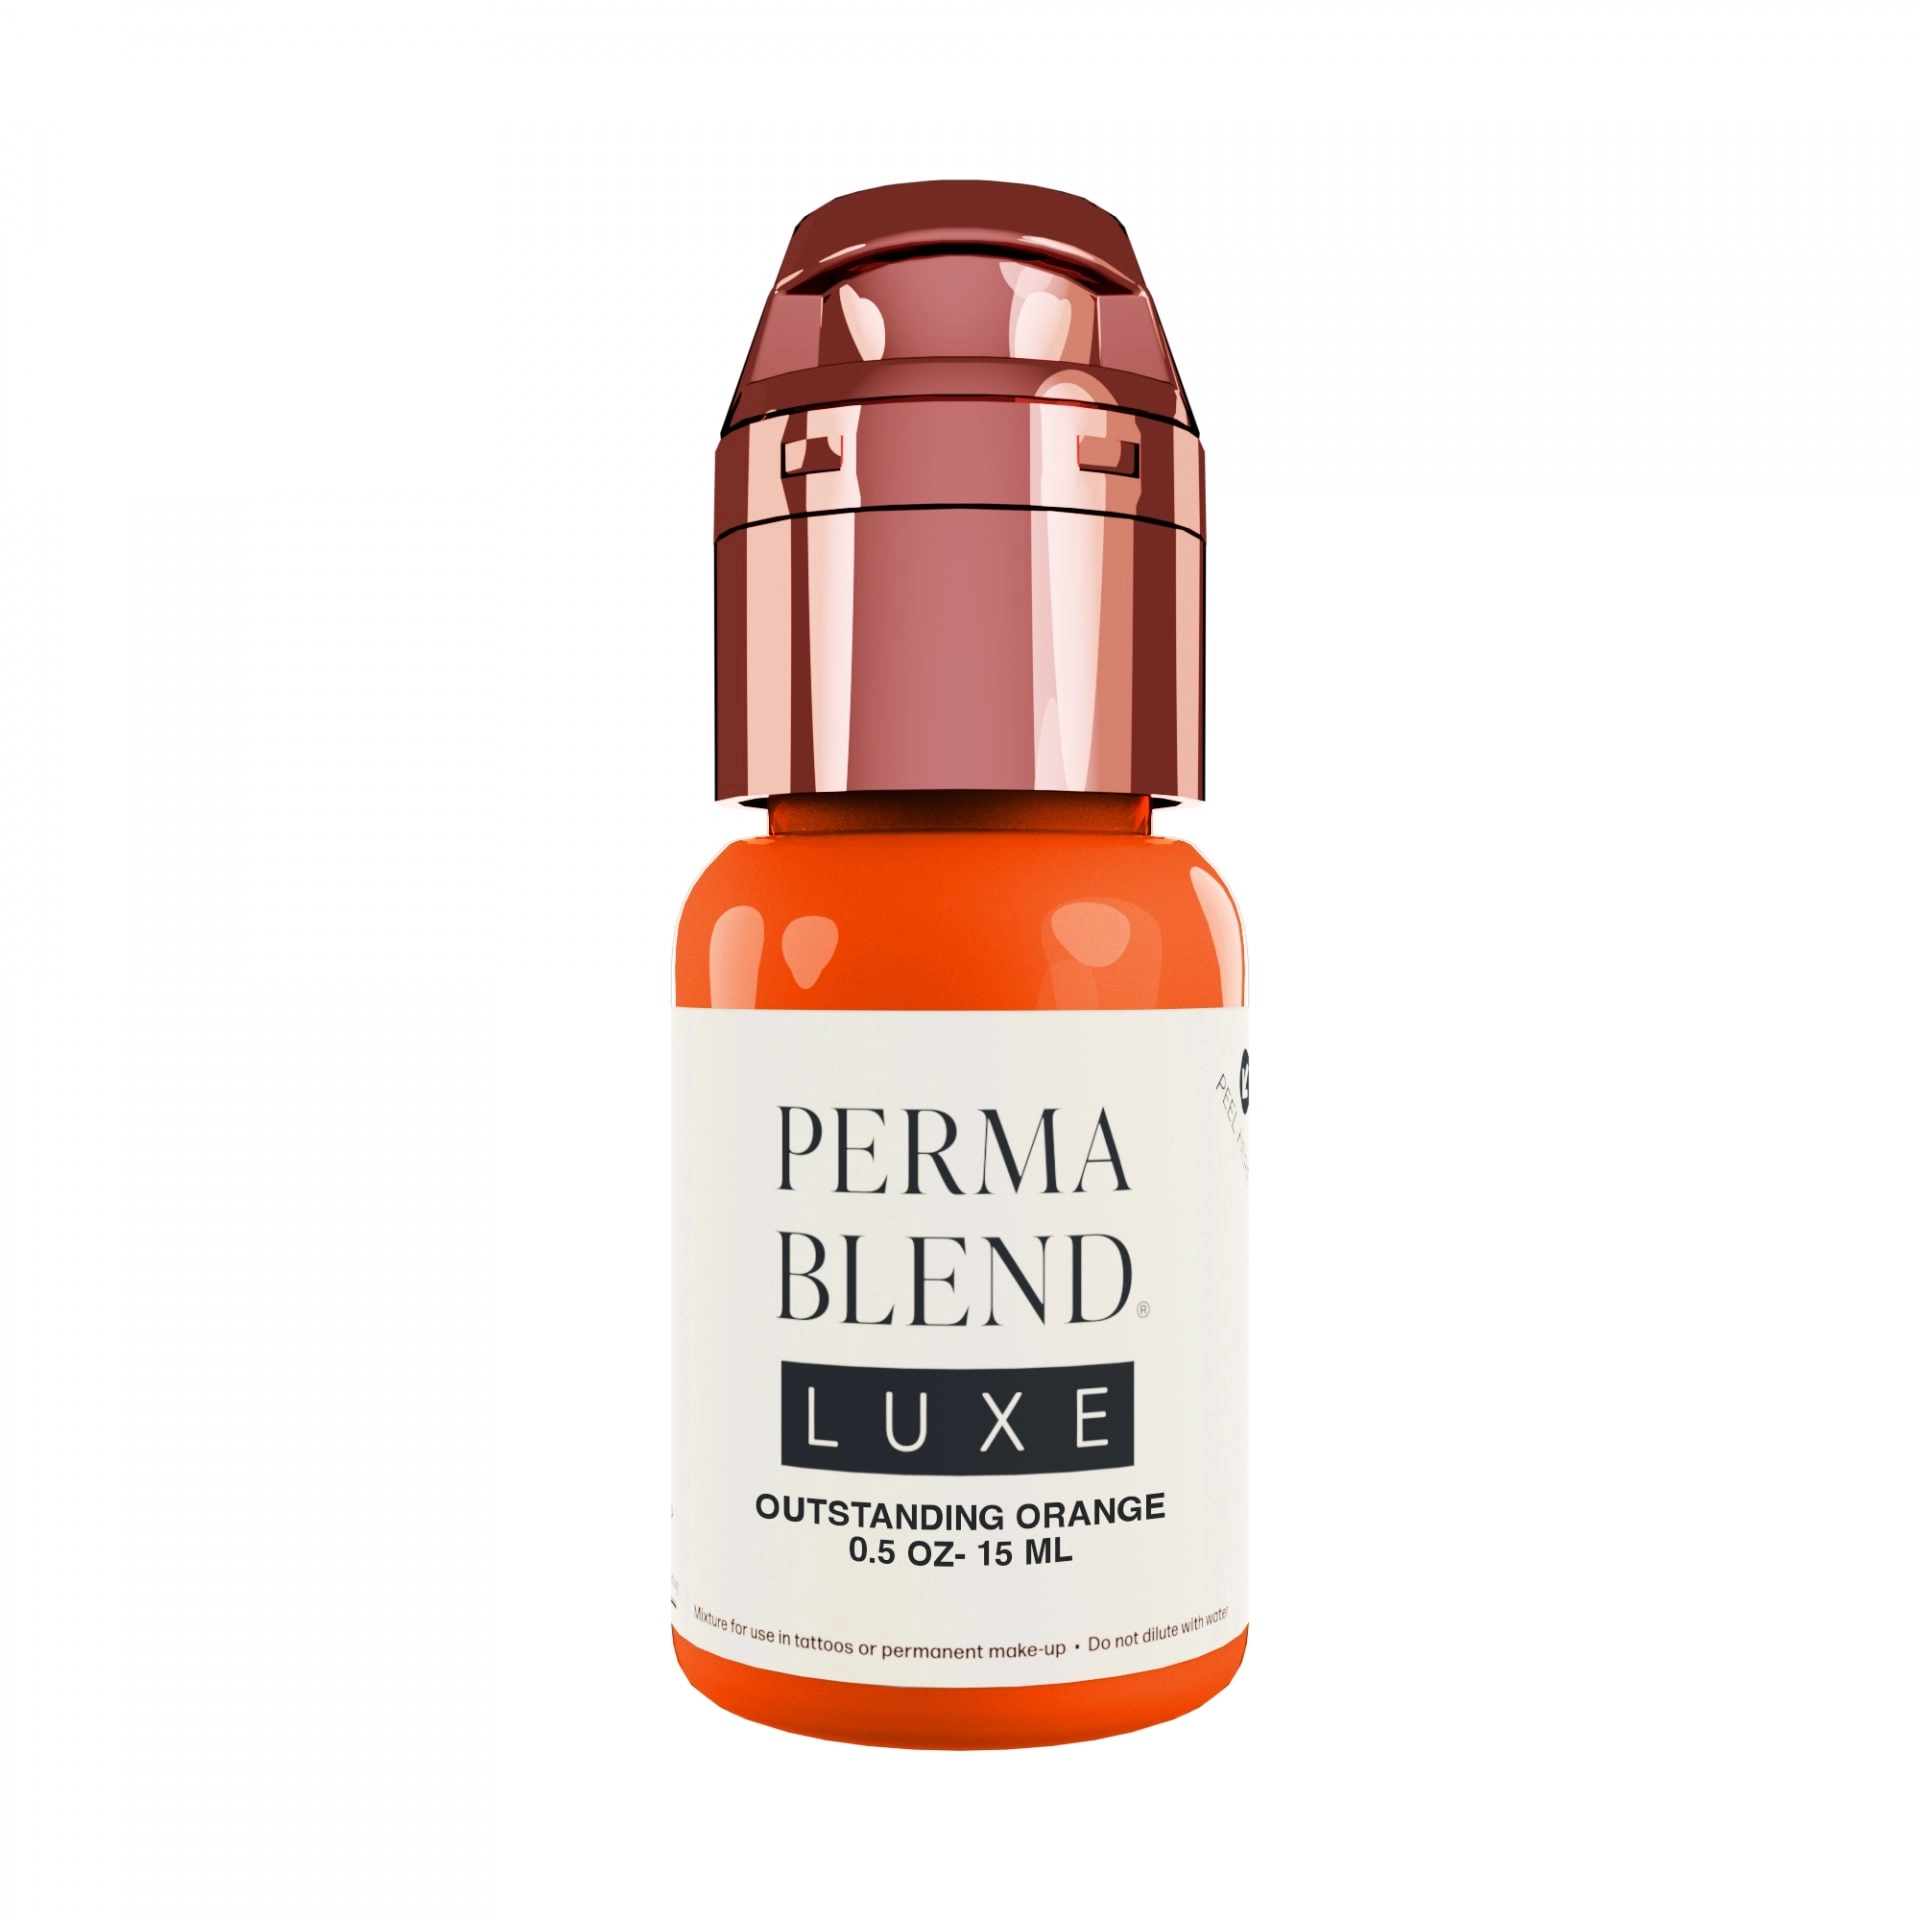 Perma Blend Luxe PMU Pigment - Outstanding Orange (15 ml)